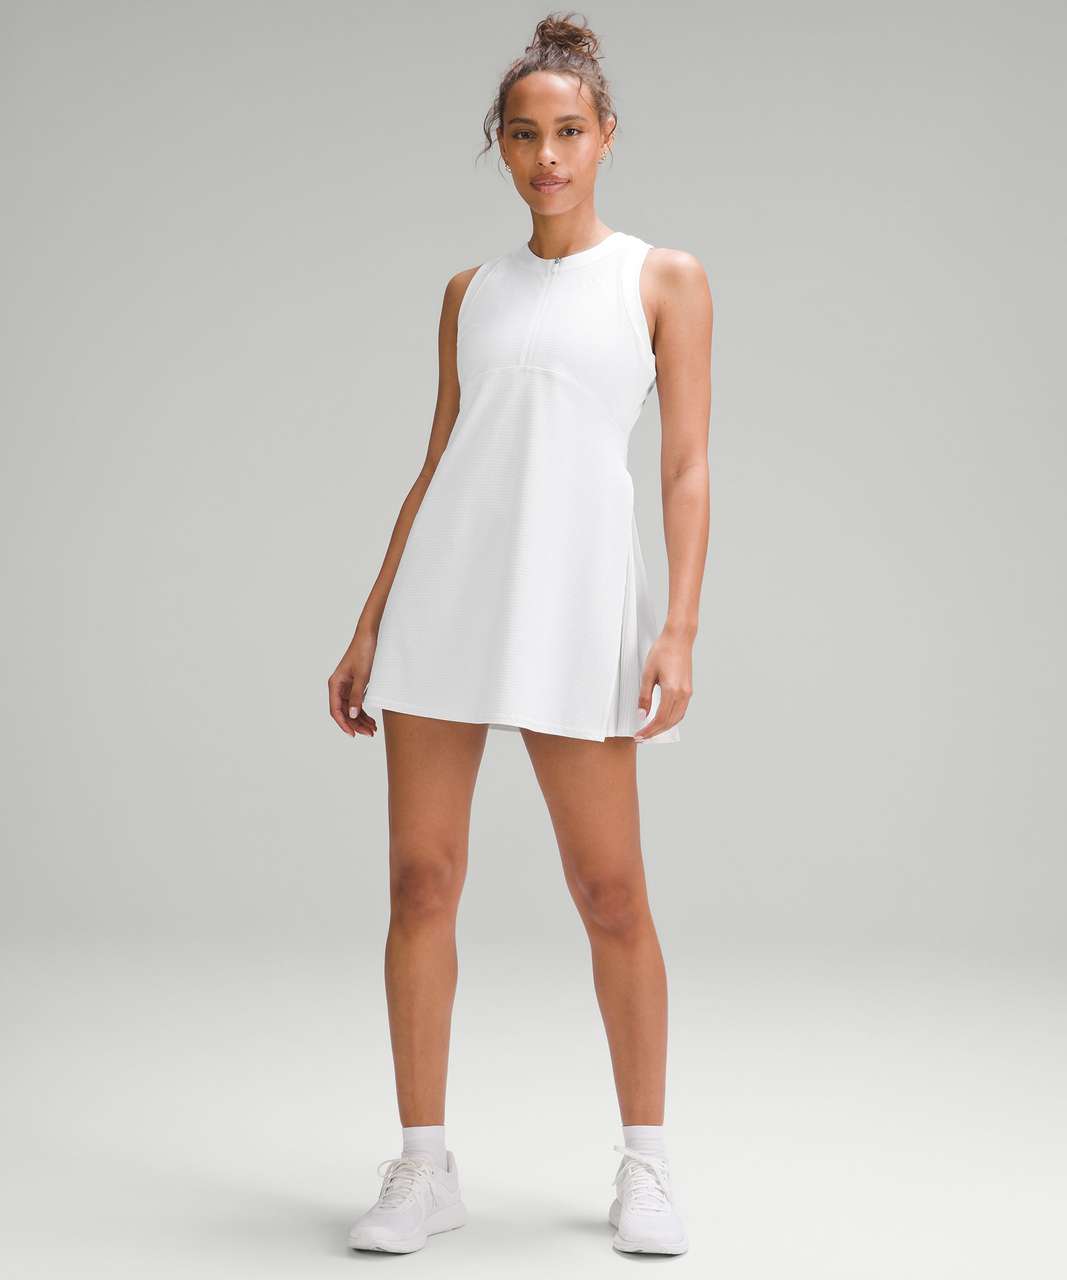 Lululemon Grid-Texture Sleeveless Tennis Dress - White